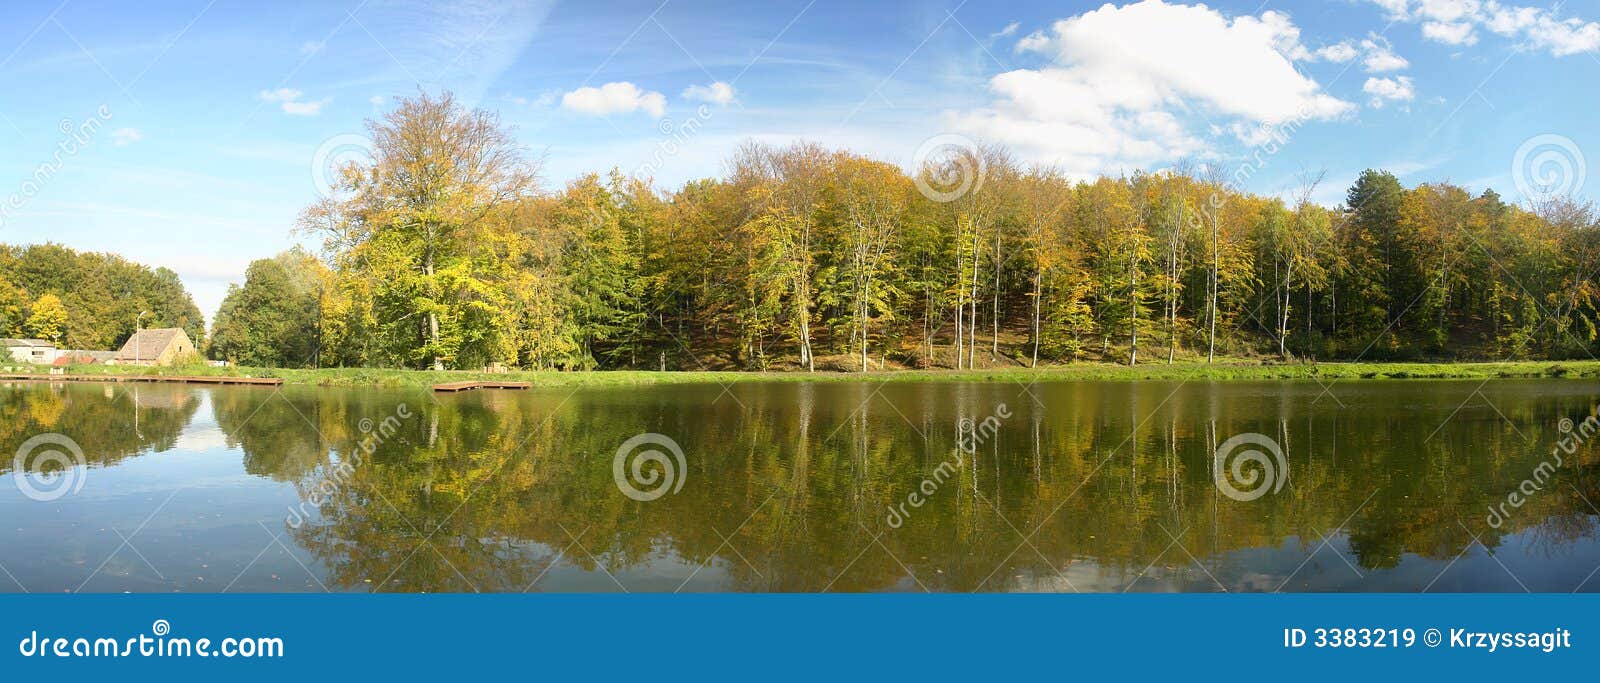 reflections on placid lake